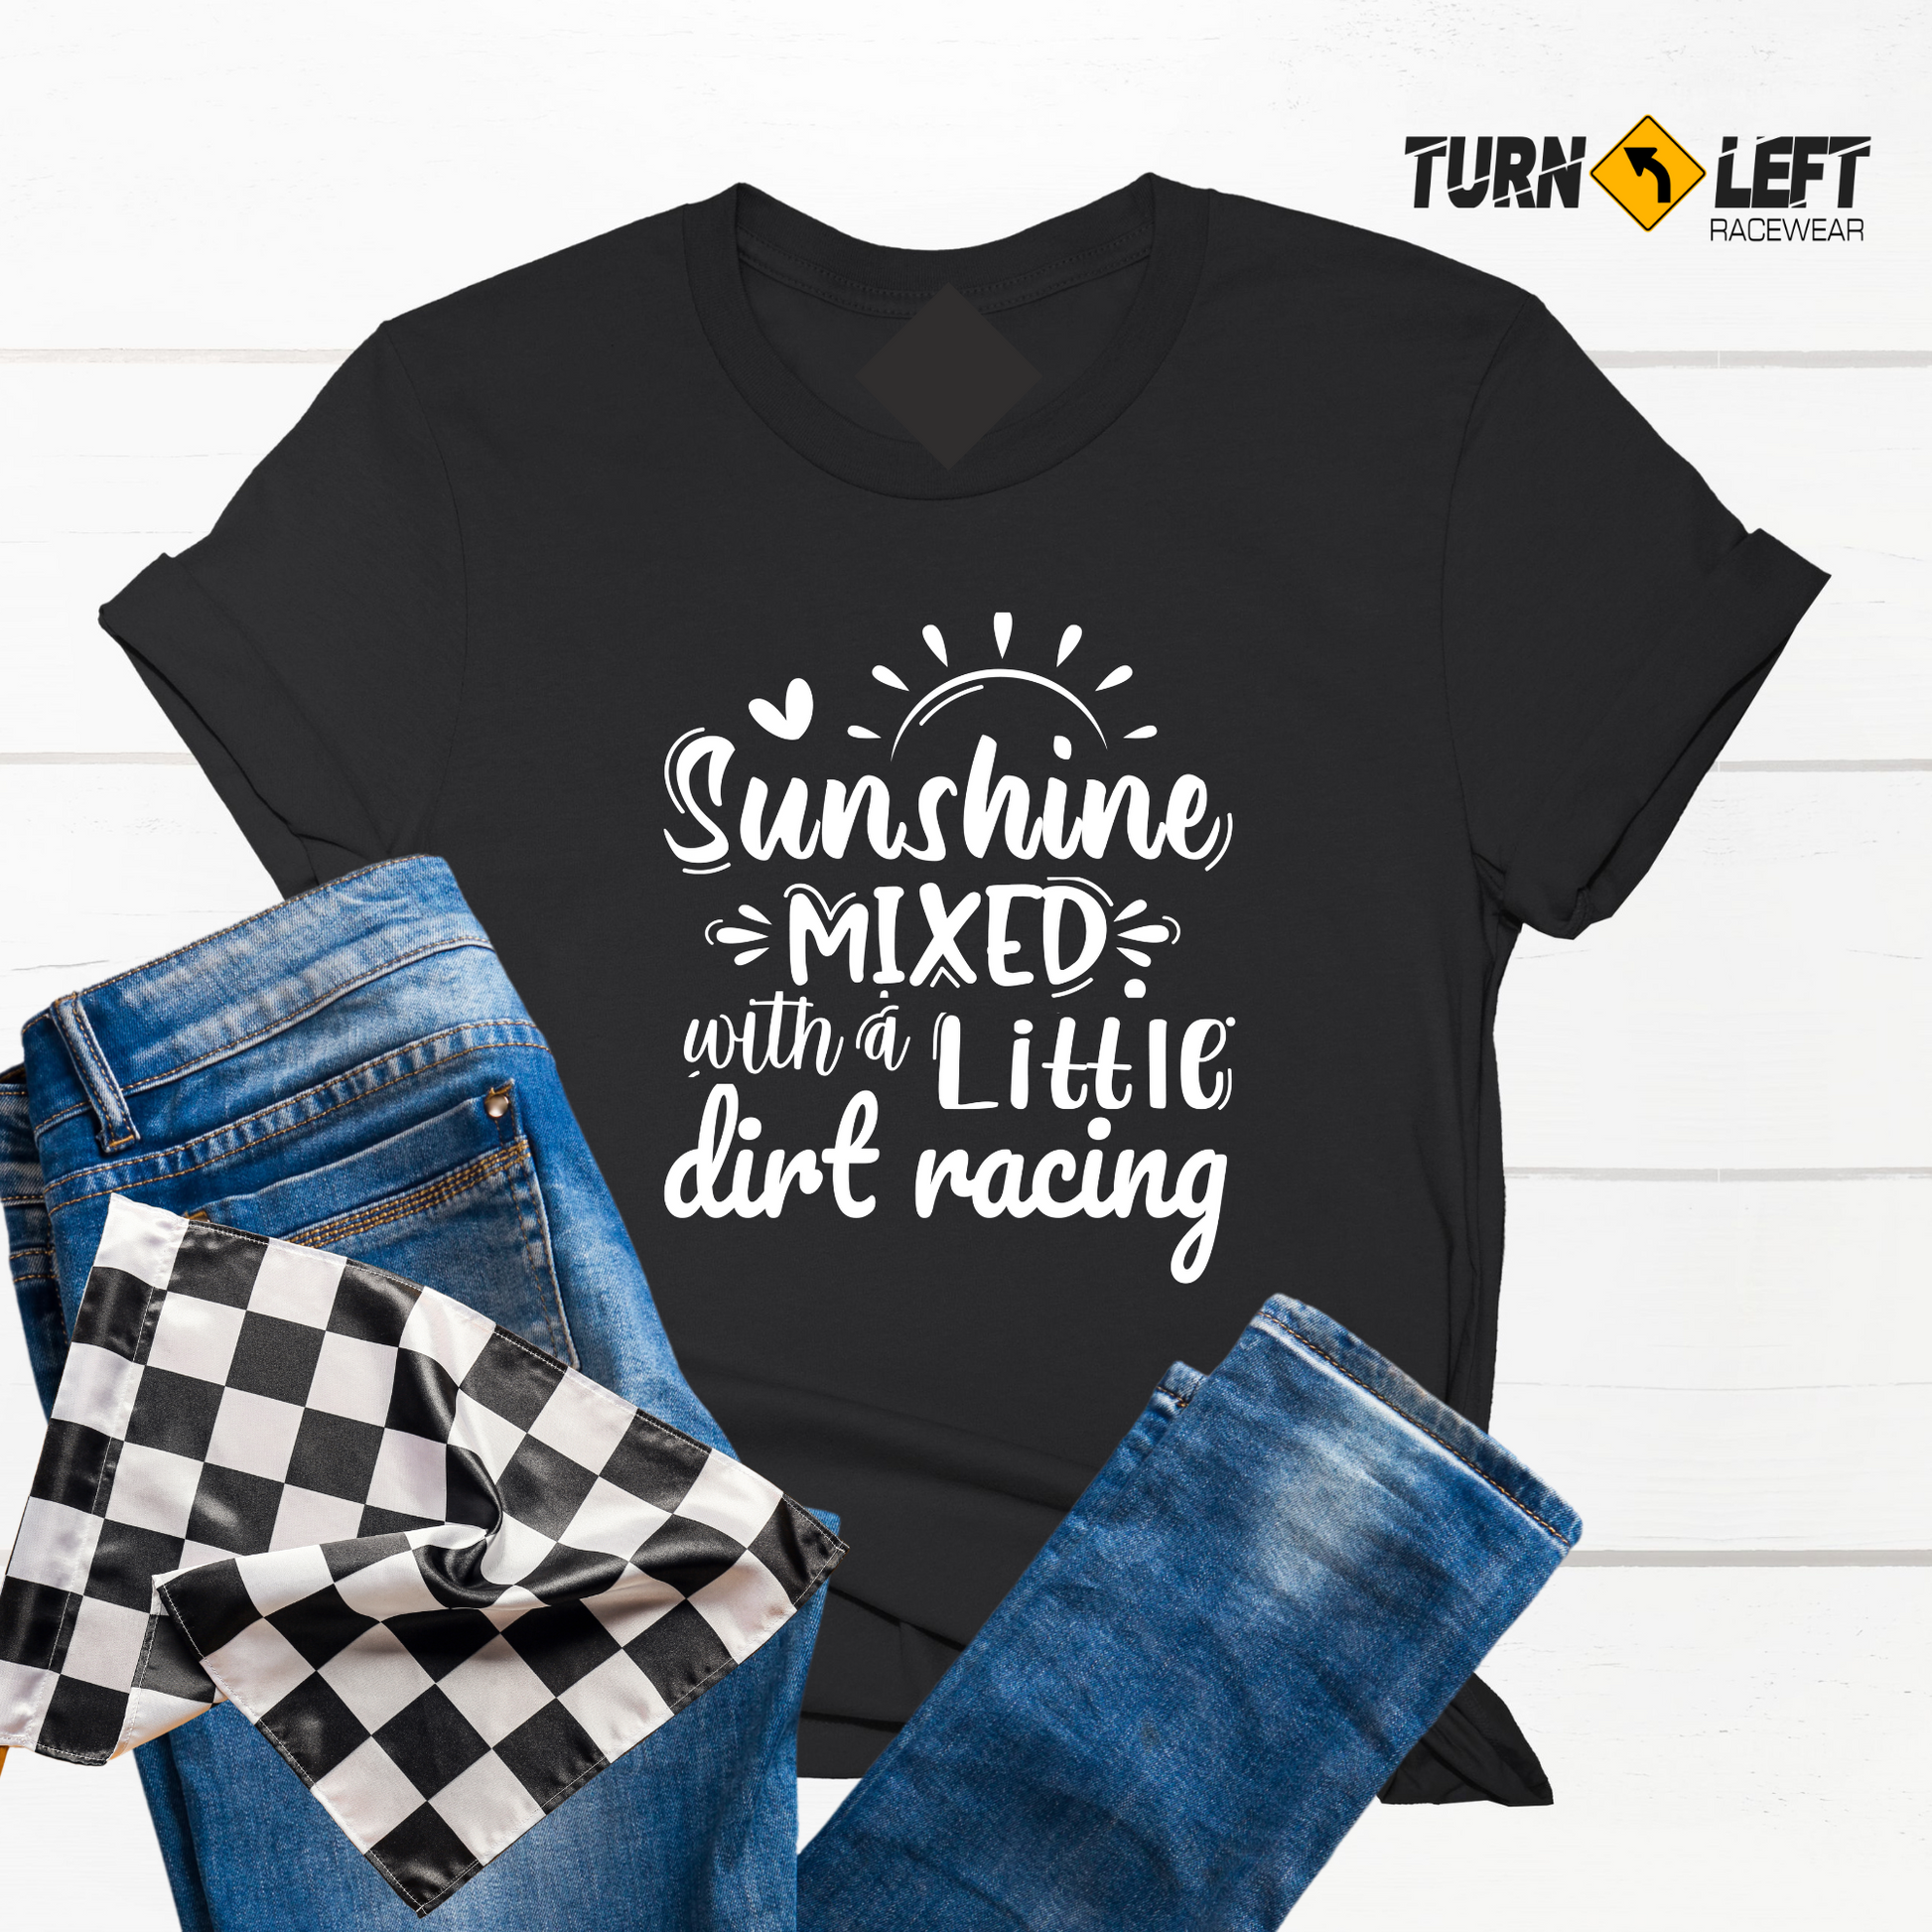 Women's dirt racing t-shirts. Dirt Track Racing Gifts for Women. Dirt race track t-shirts